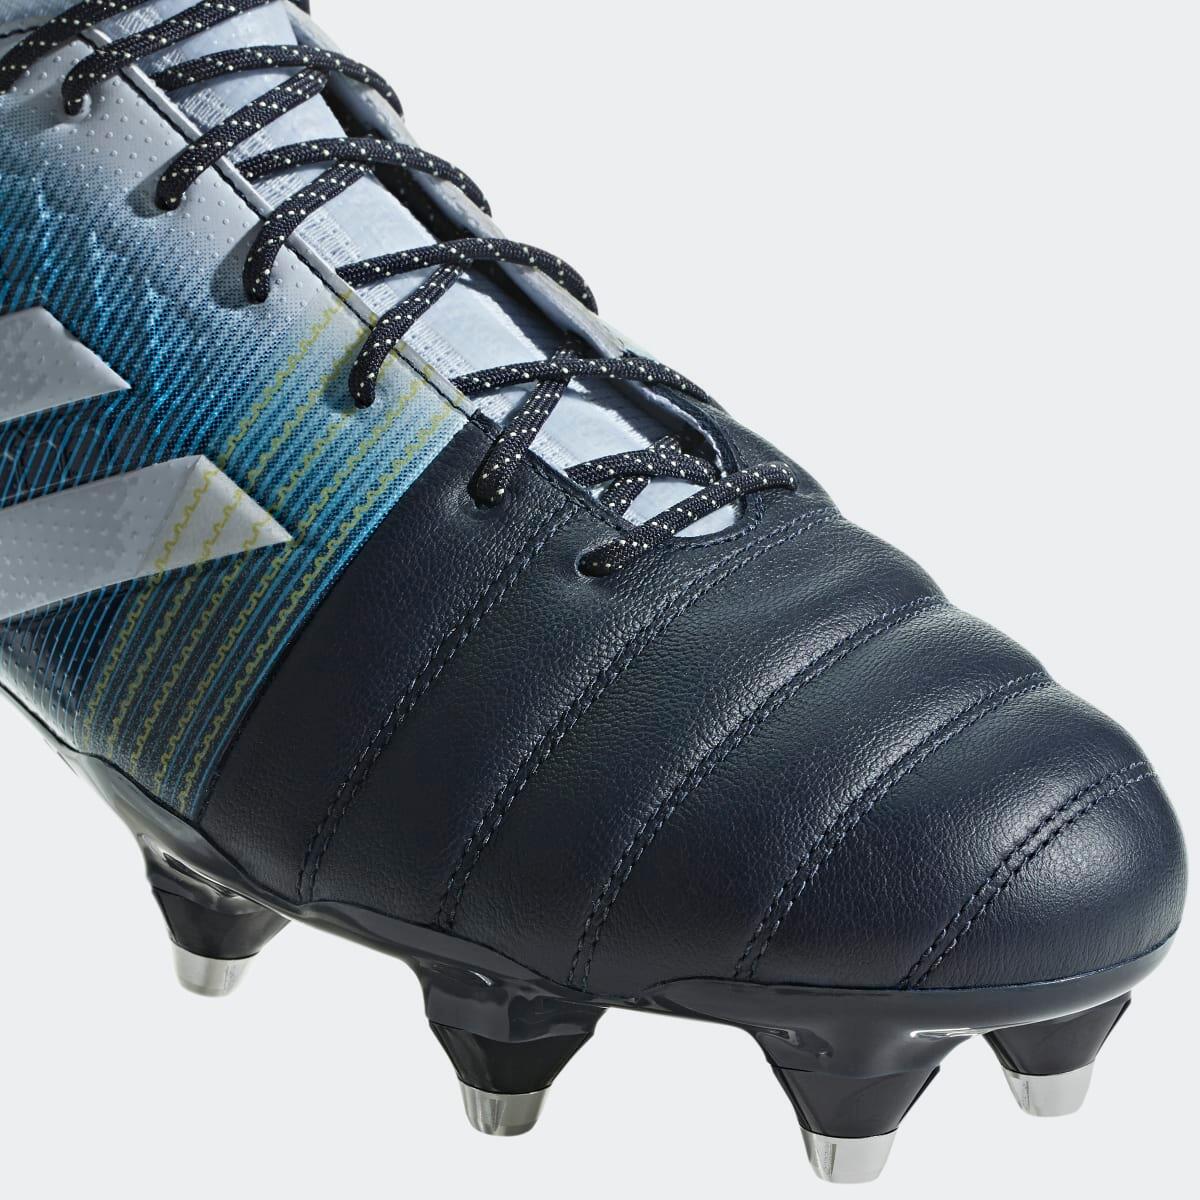 Adidas Kakari X-Kevlar Soft Ground Rugby Boots 5/7